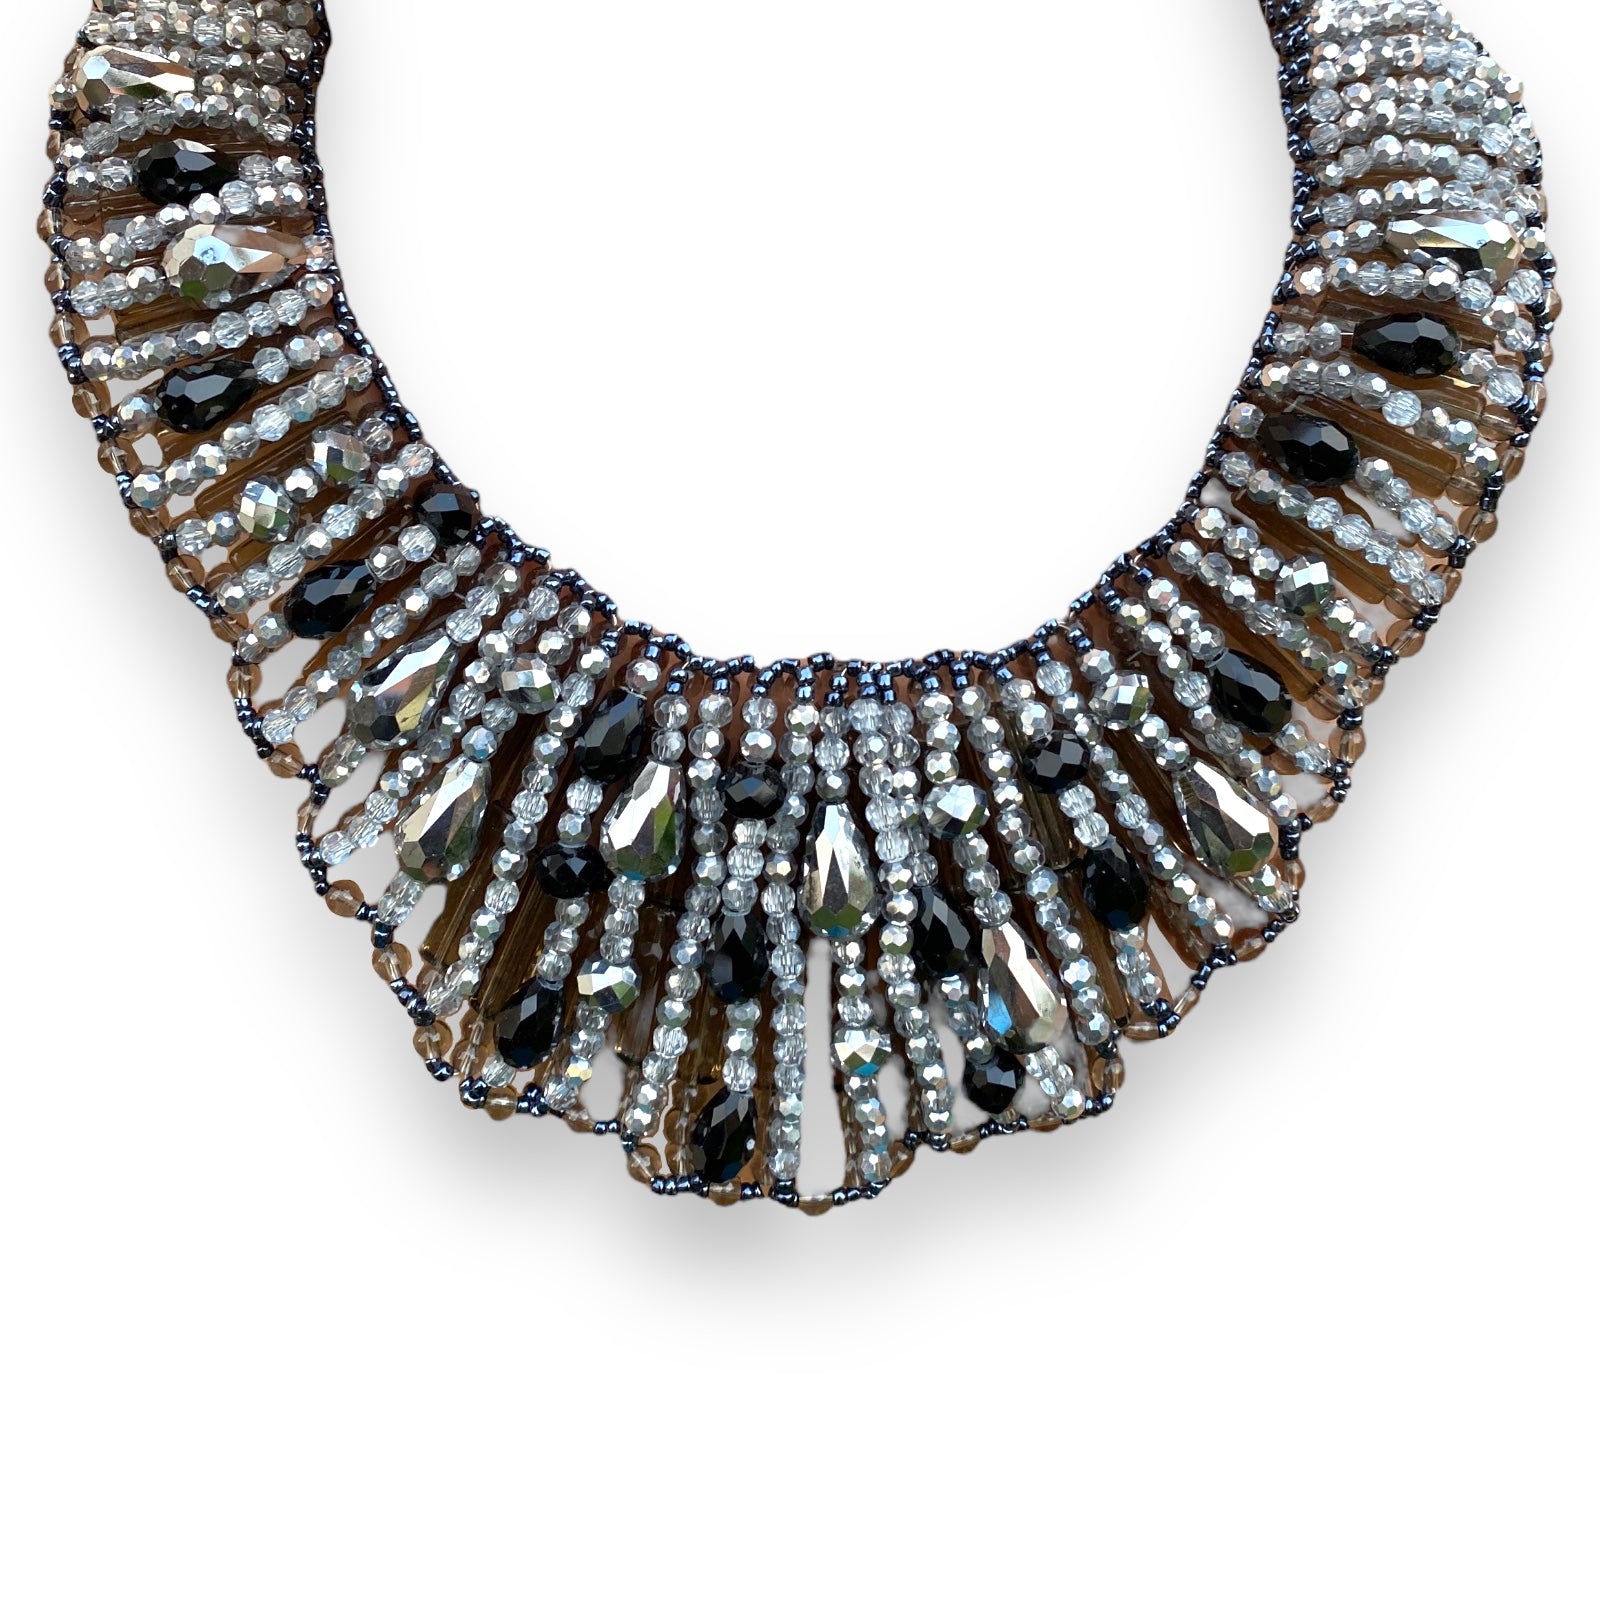 Handmade Necklace 20" Metallic Black Grey Beads Glitzy Collar Wrap Choker